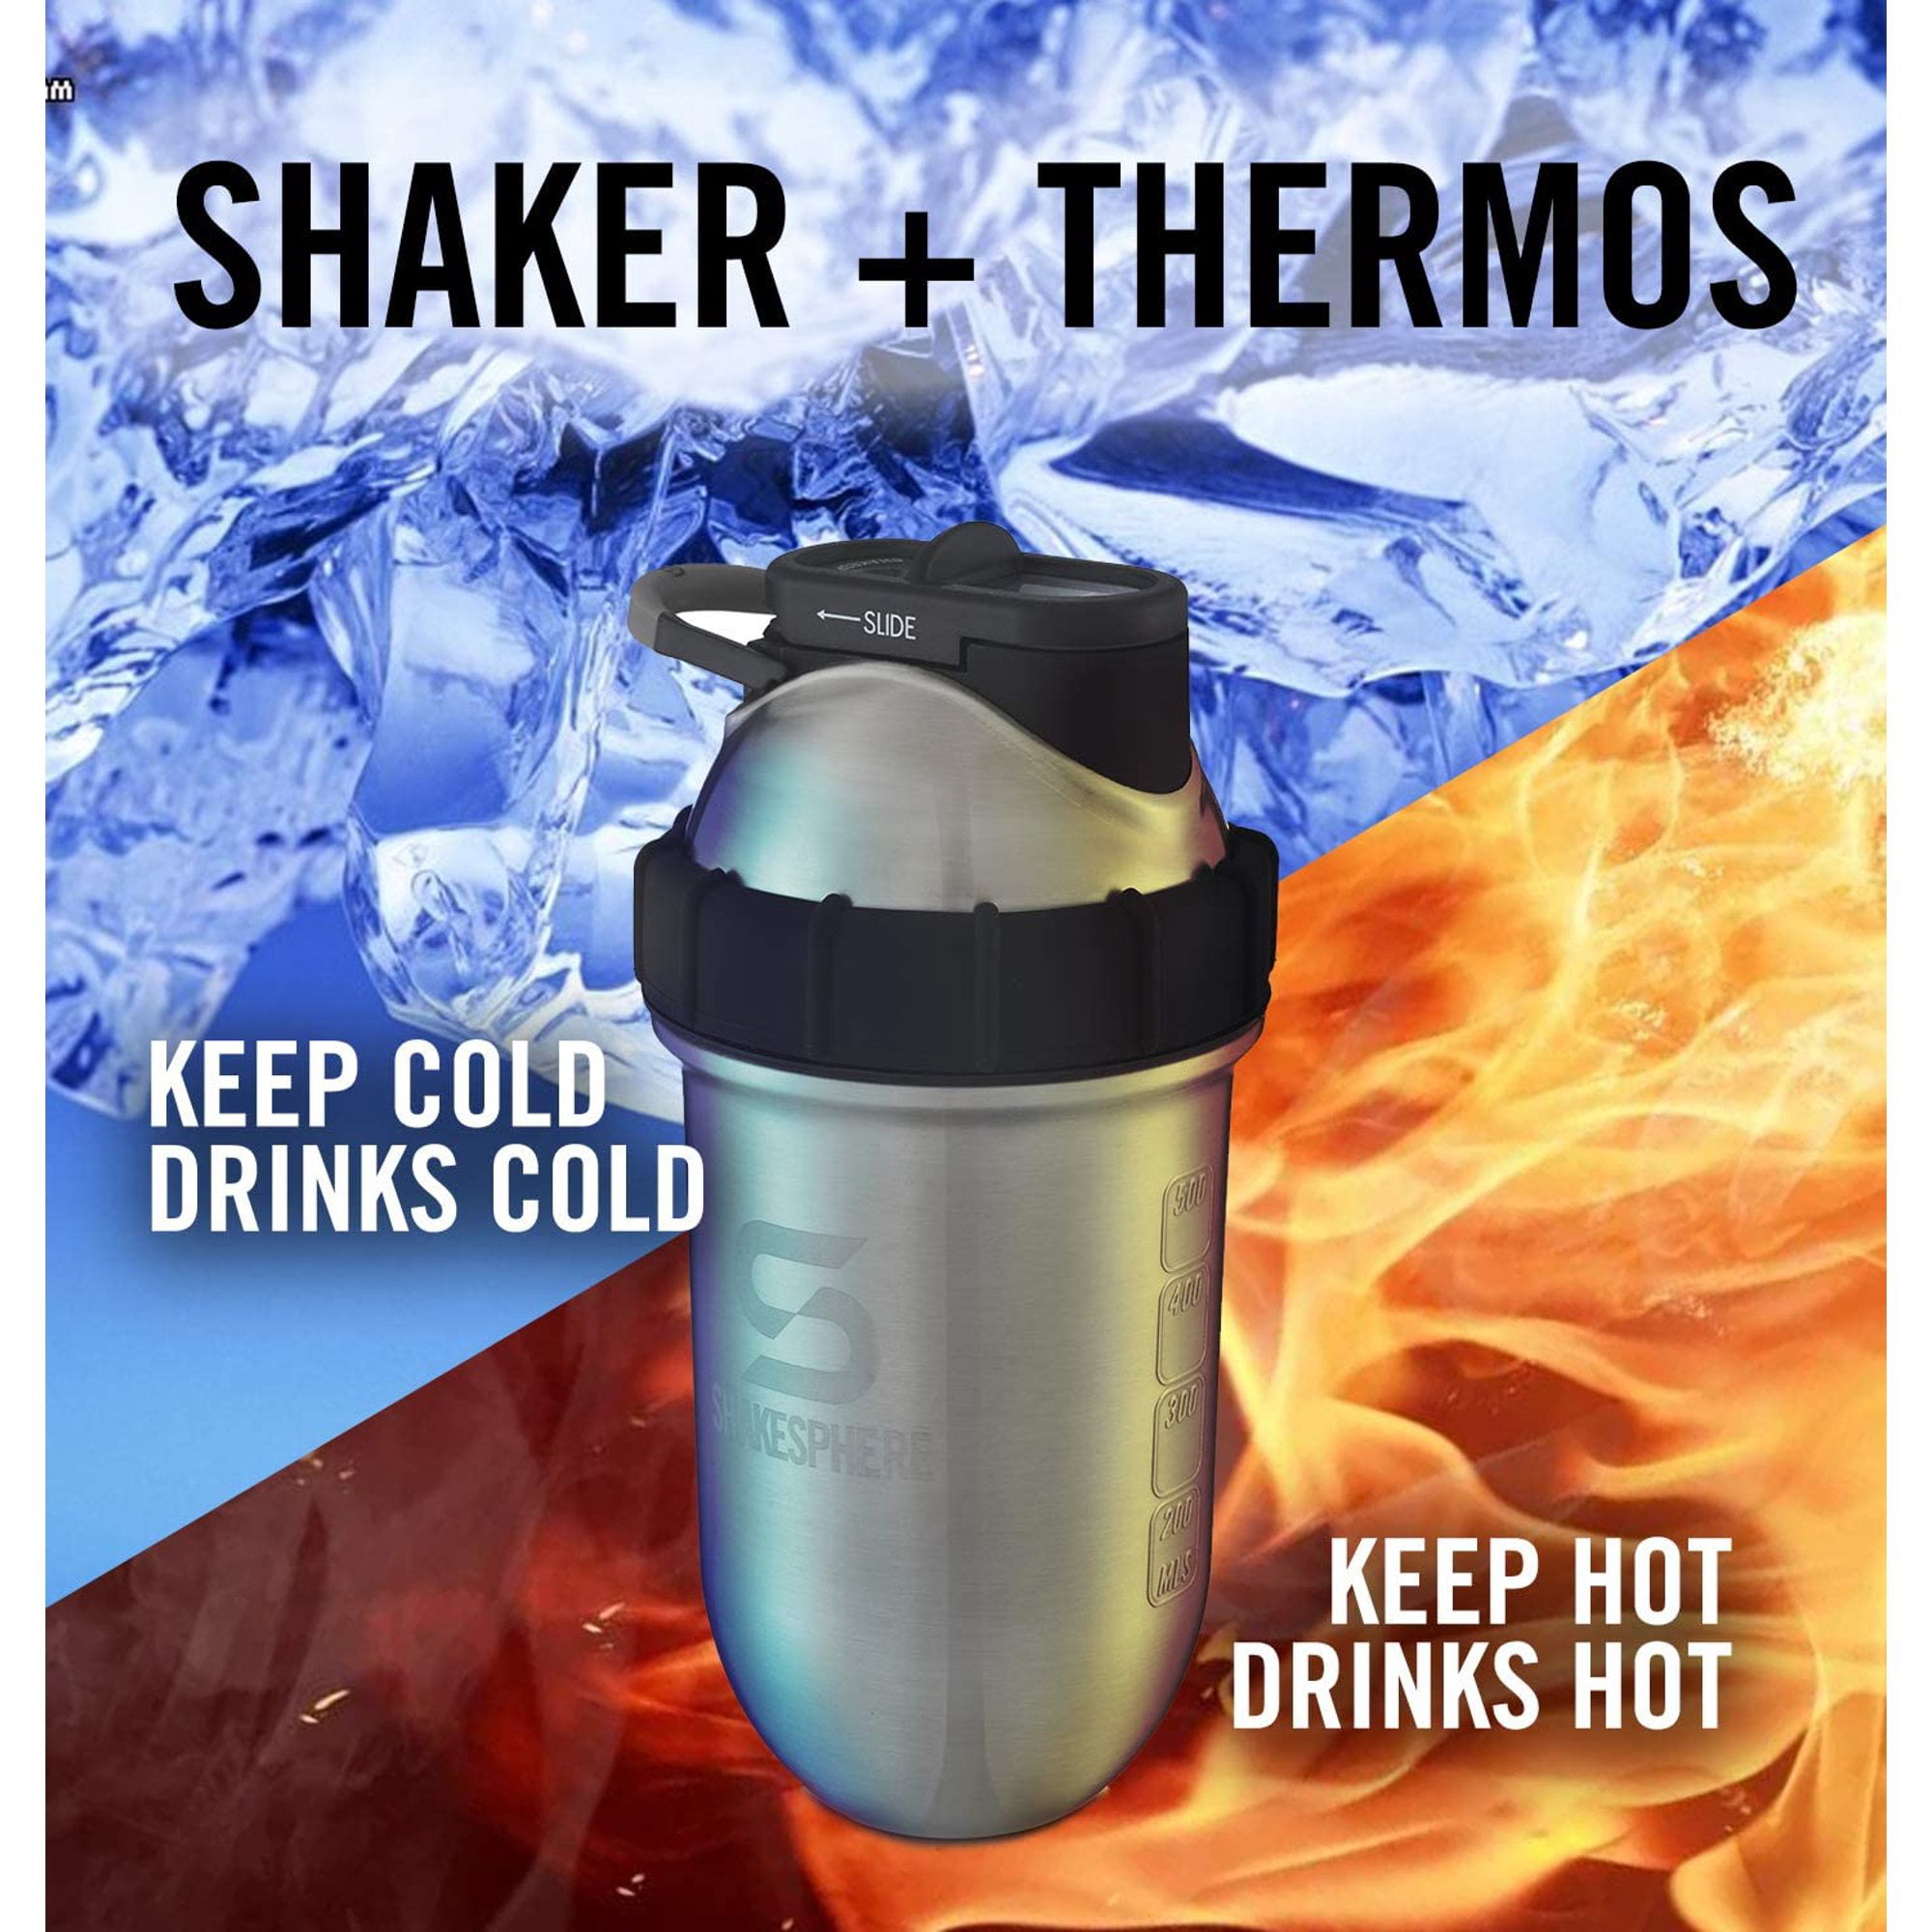 Shakesphere Tumbler Steel Protein Shaker Bottle Keeps Hot Drinks